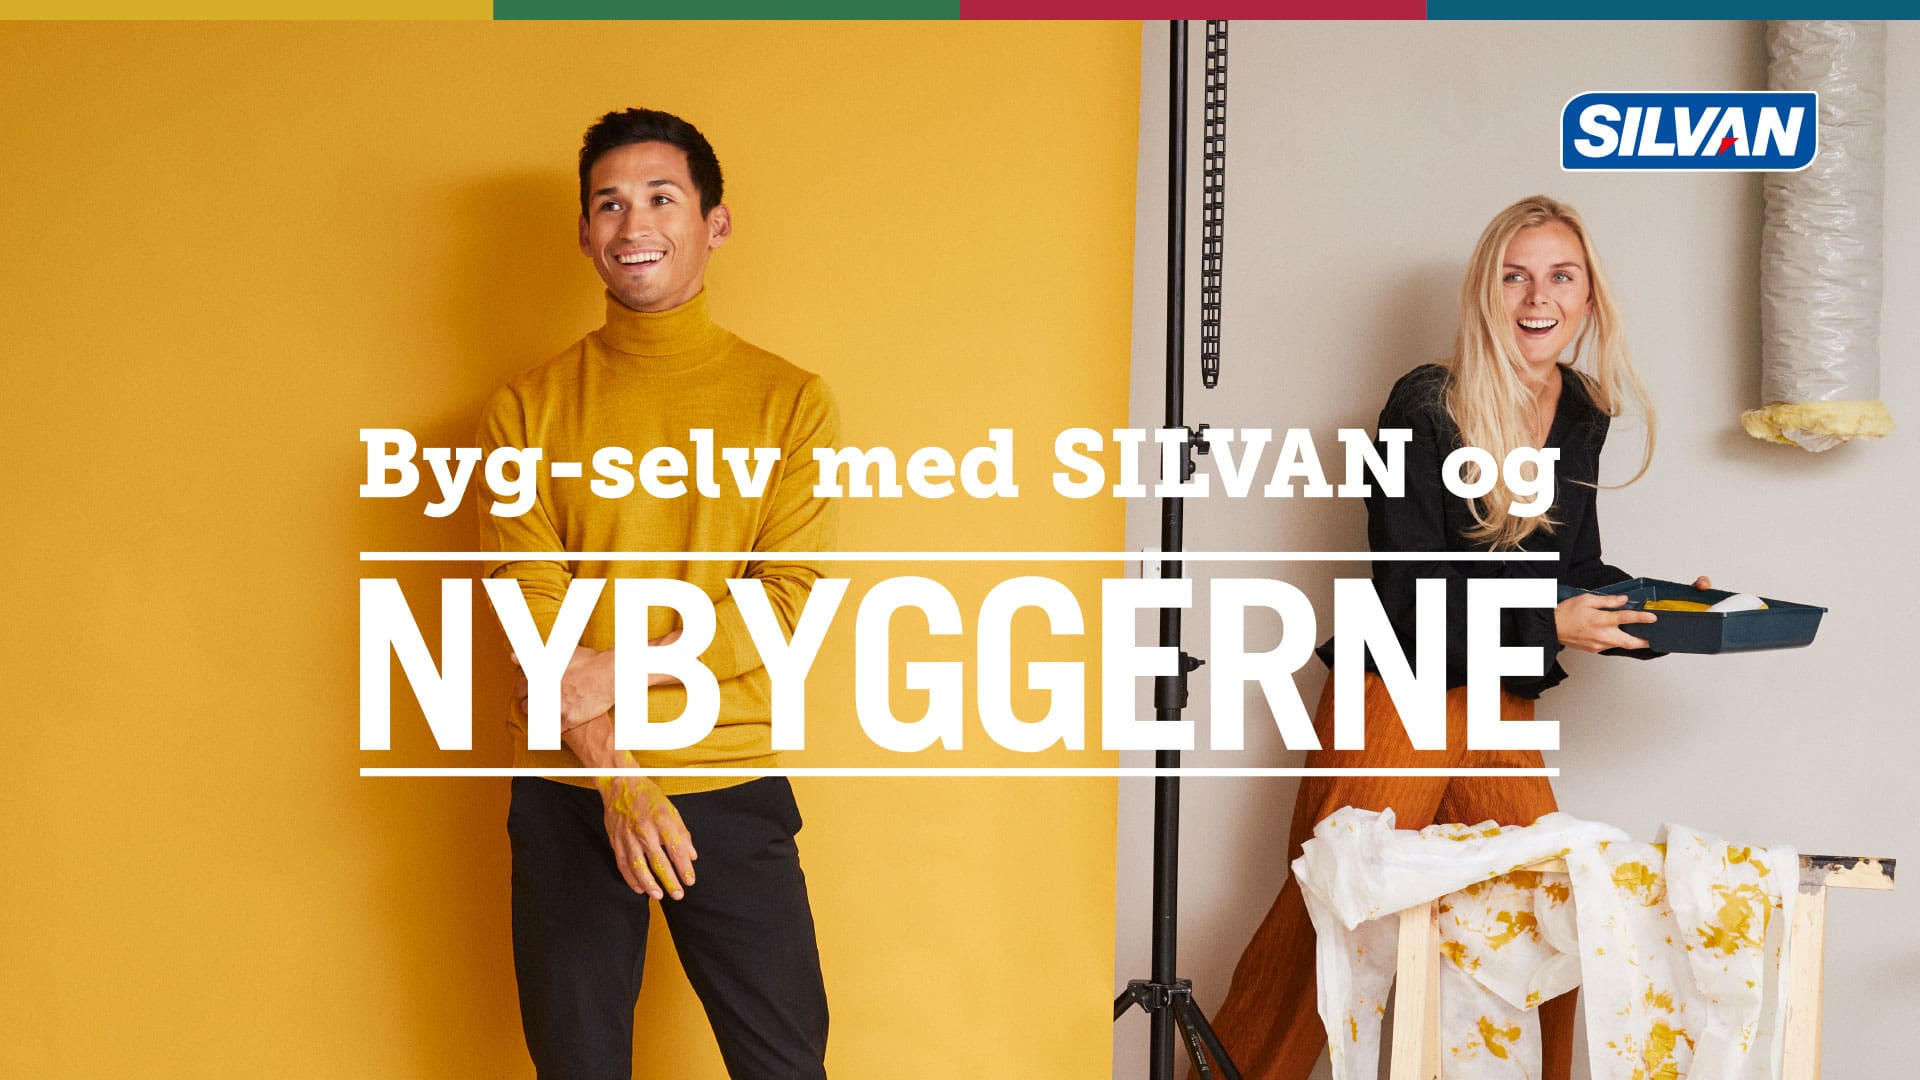 Silvan Nybyggerne 1920x1080 1